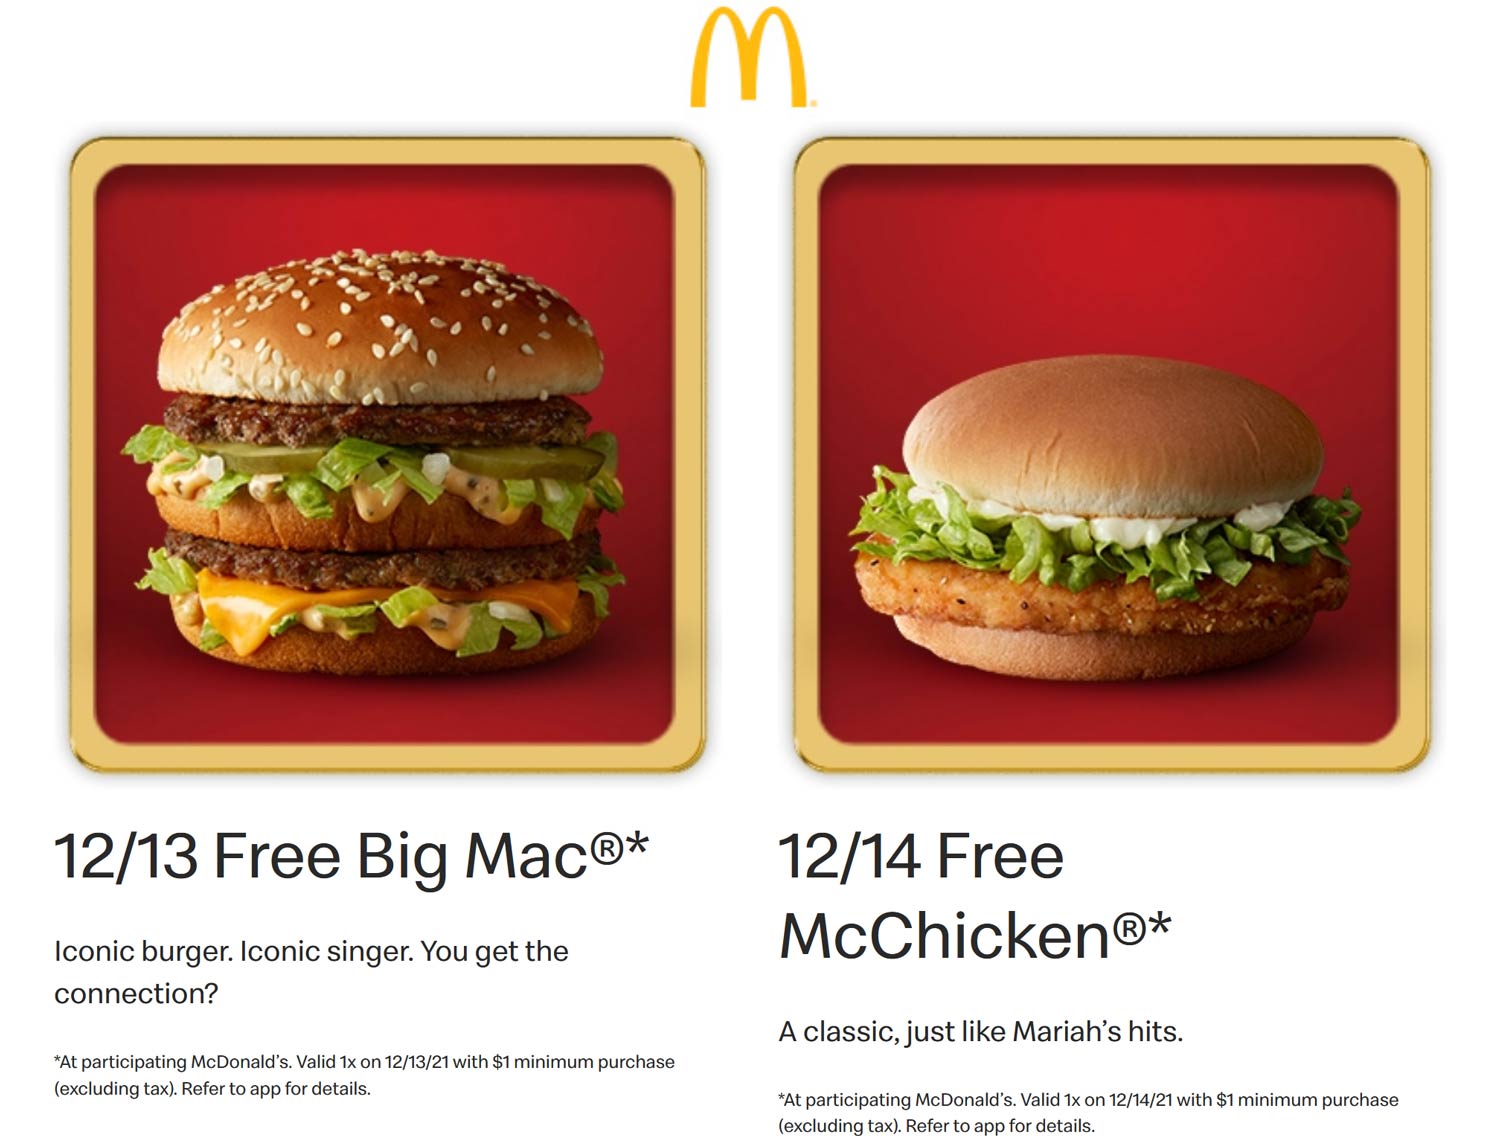 McDonalds restaurants Coupon  Free big mac Monday & chicken sandwich Tuesday via $1 app order at McDonalds #mcdonalds 